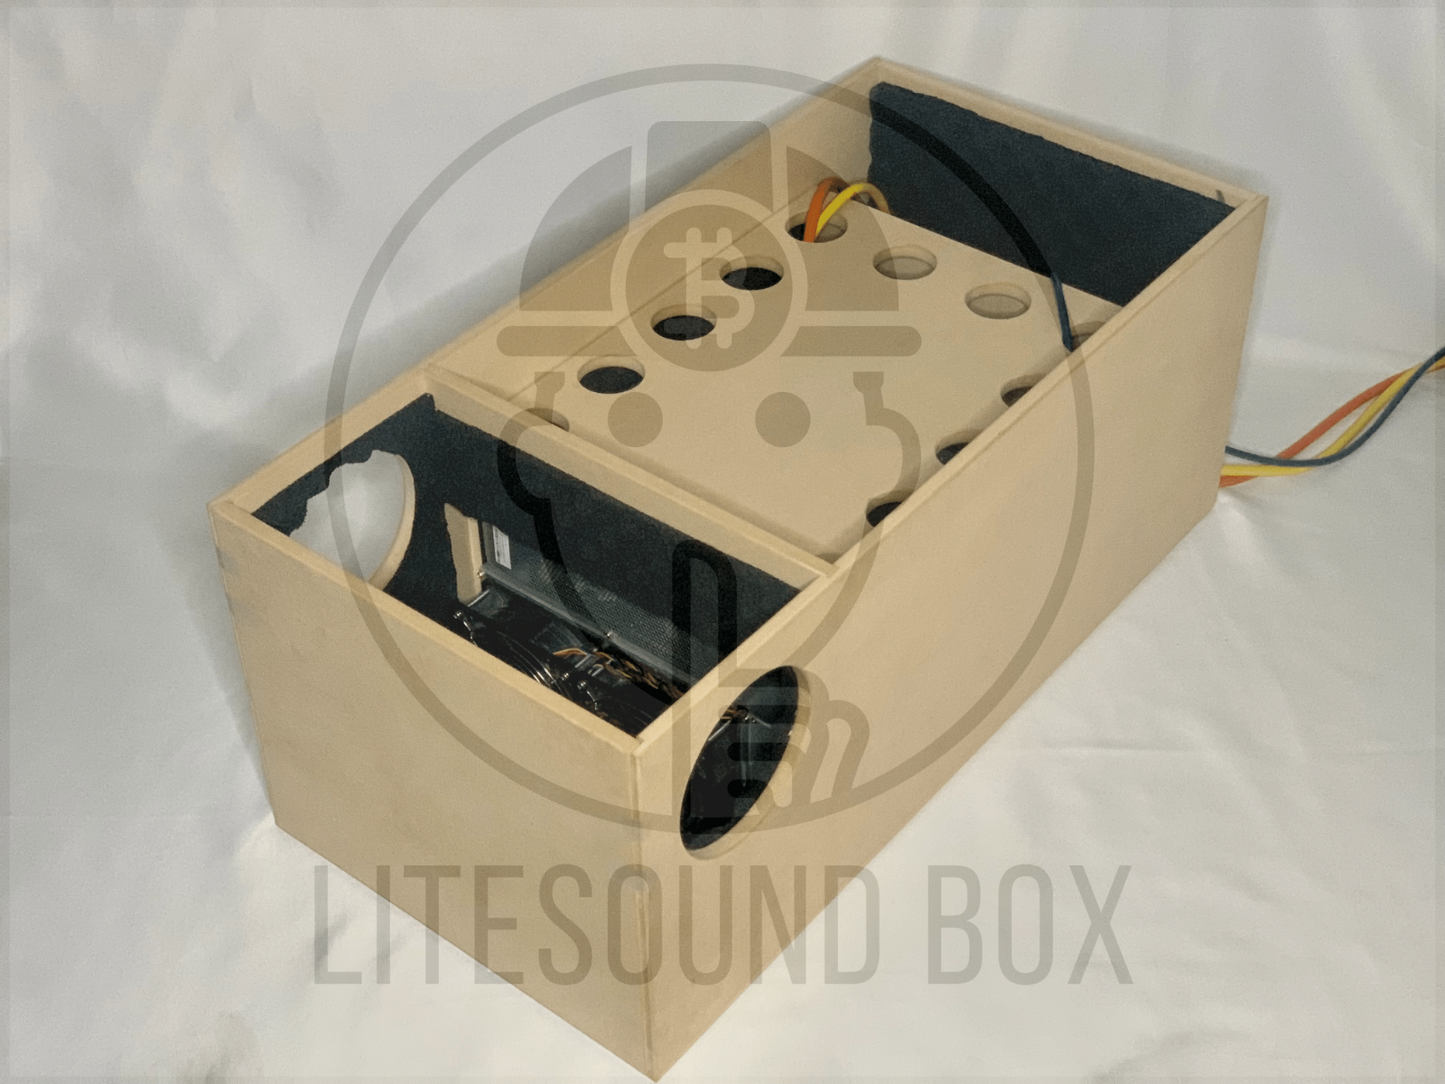 LiteSound Box for ICERIVER KS1, KS2, KS3M and KS3